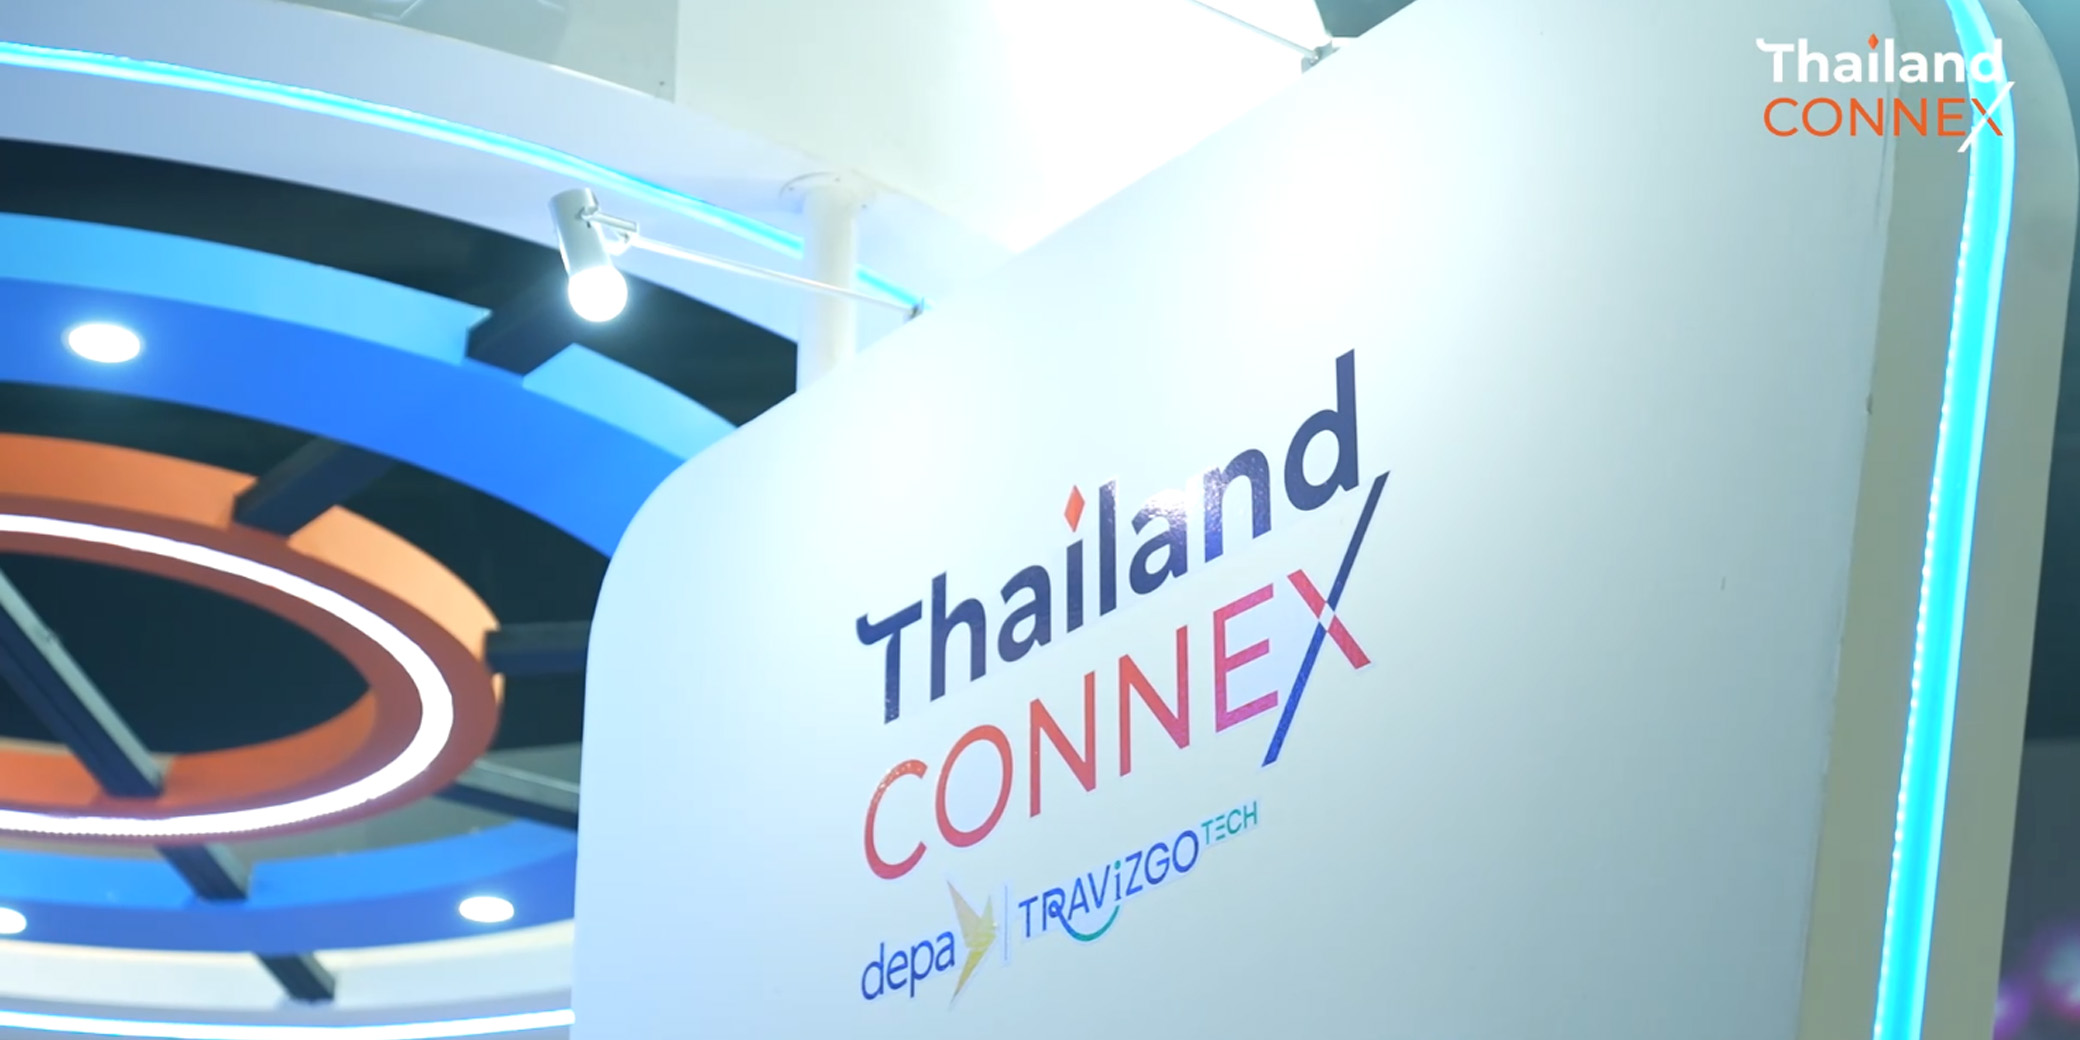 TokenCONNEX by ThailandCONNEX